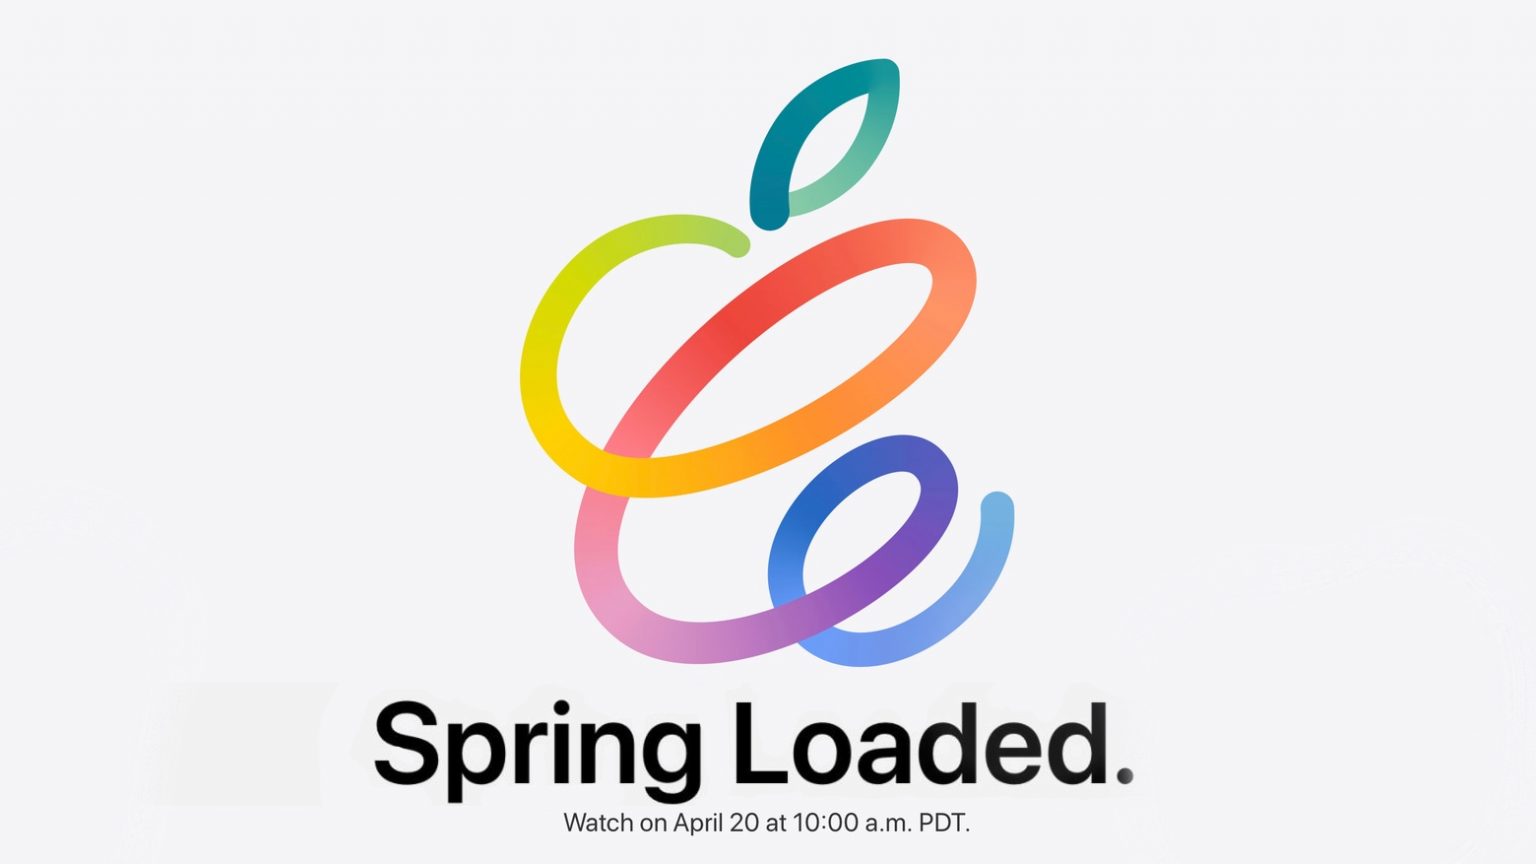 Apple Spring Loaded event on April 20.